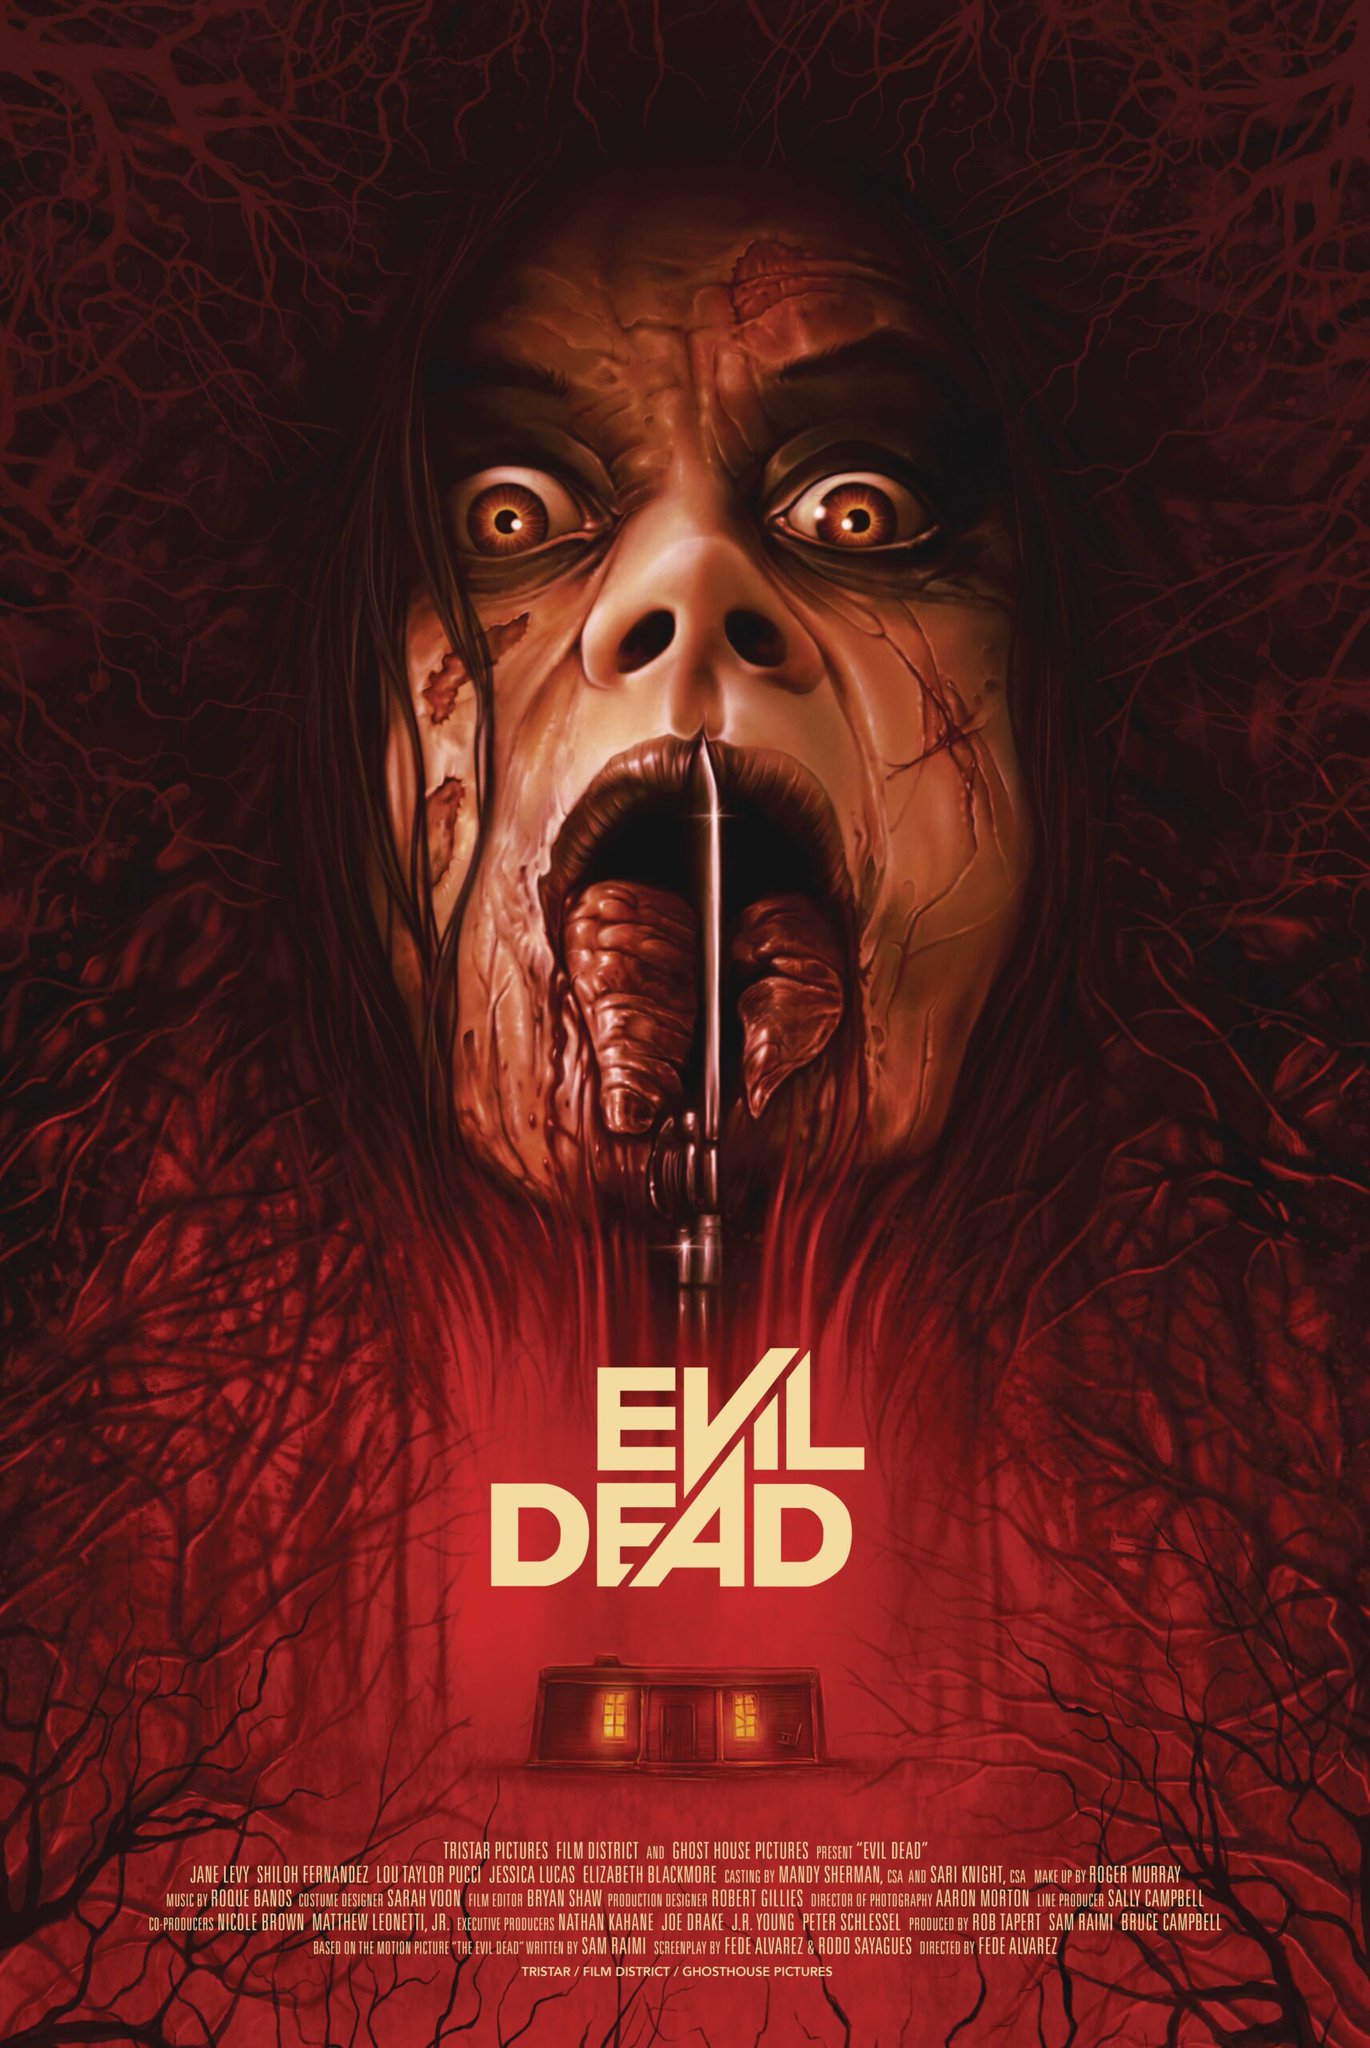 Evil Dead Remake Director Fede Alvarez Lands Dante's Inferno